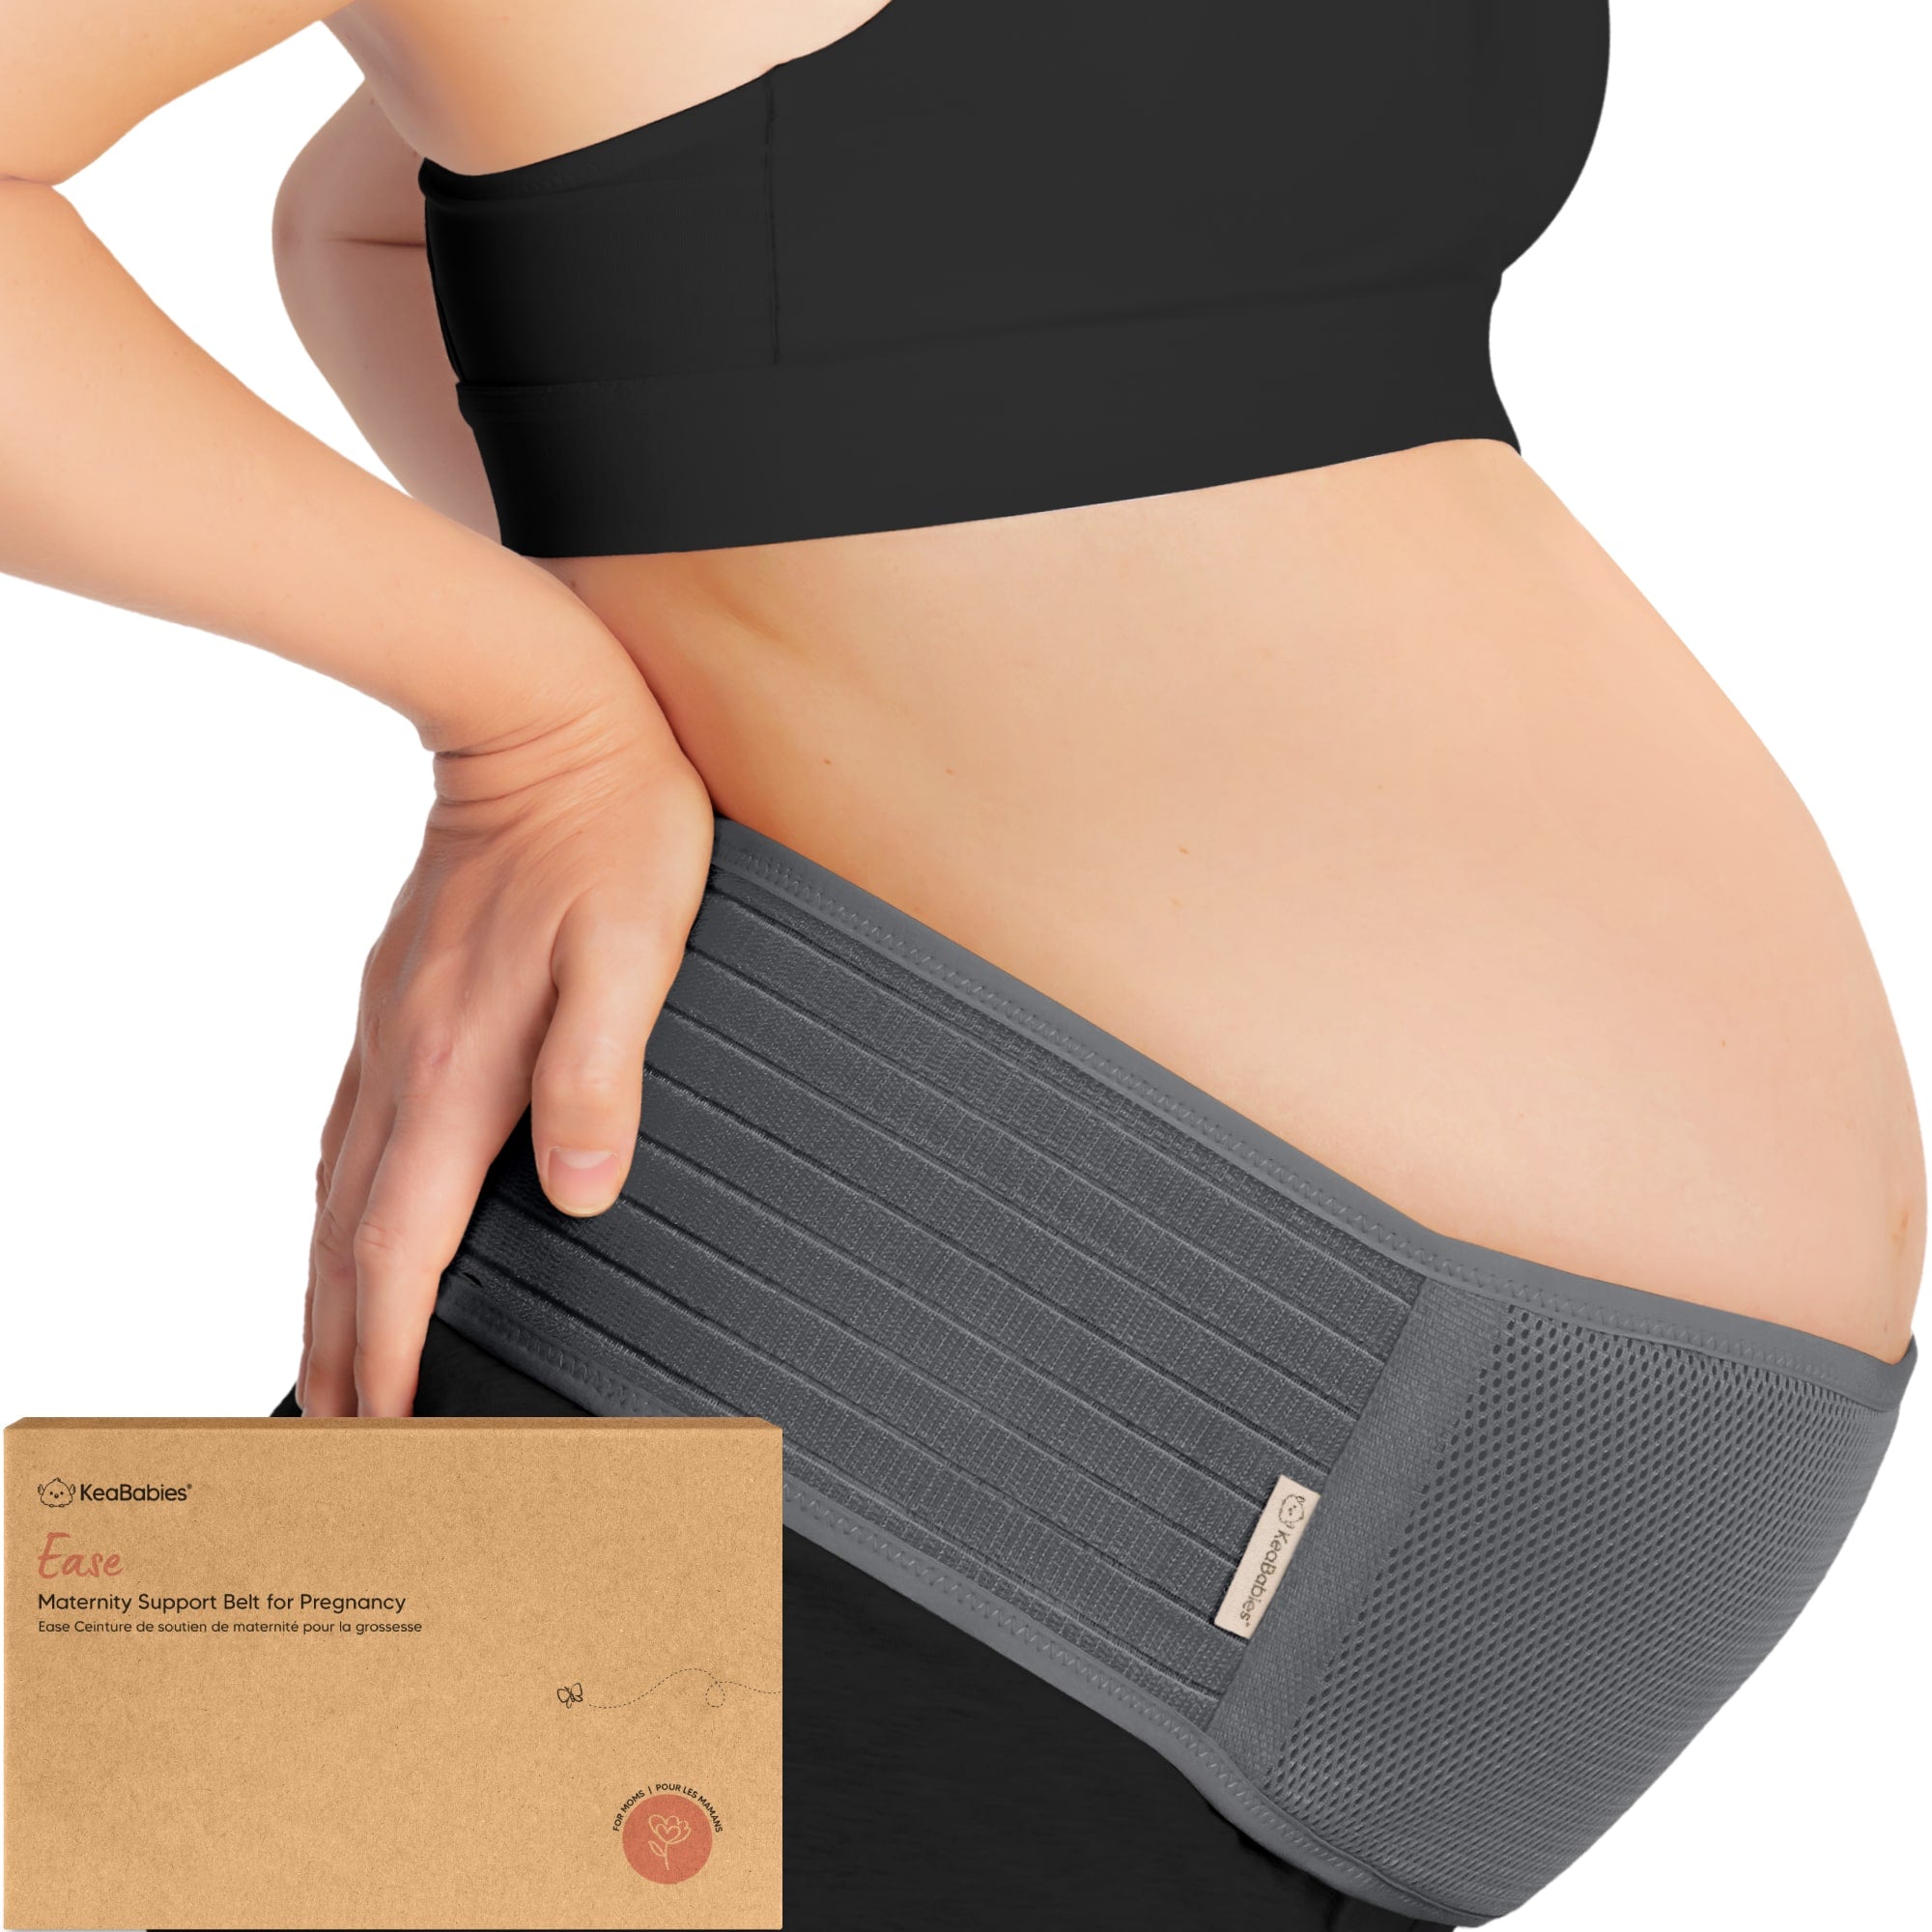 TUWABEII Pregnancy Belly Support Band Belt Pregnancy Support Belt